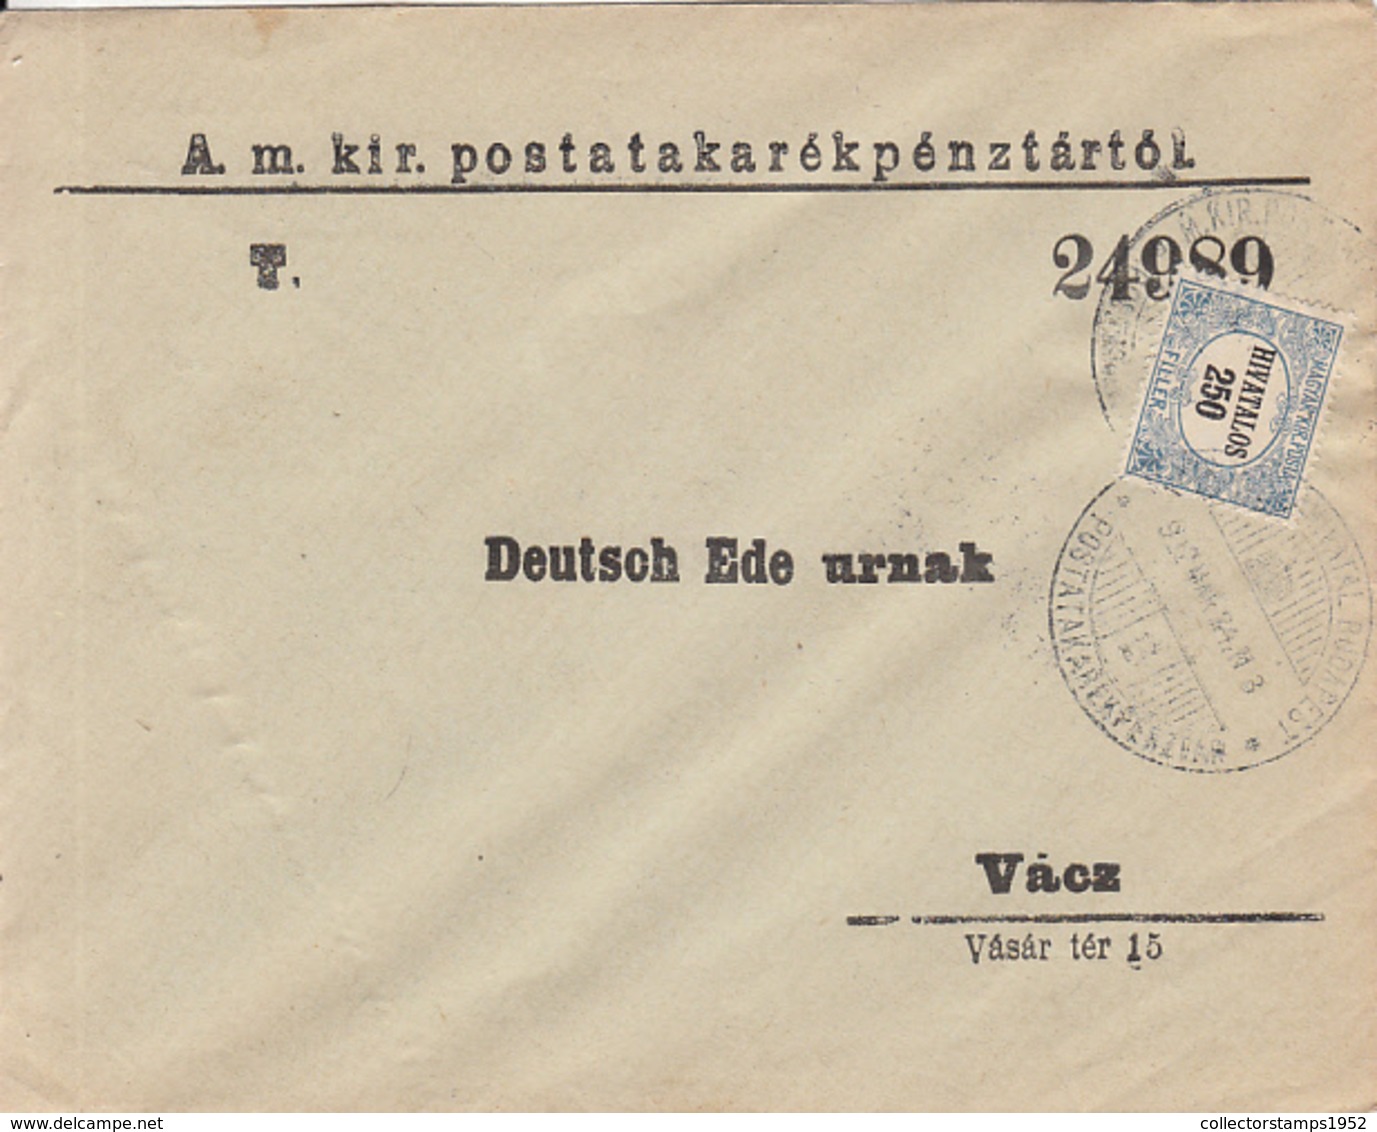 7345FM- 250 FILLER OFFICIAL STAMP ON POST SAVINGS BANK HEADER COVER, 1922, HUNGARY - Dienstmarken